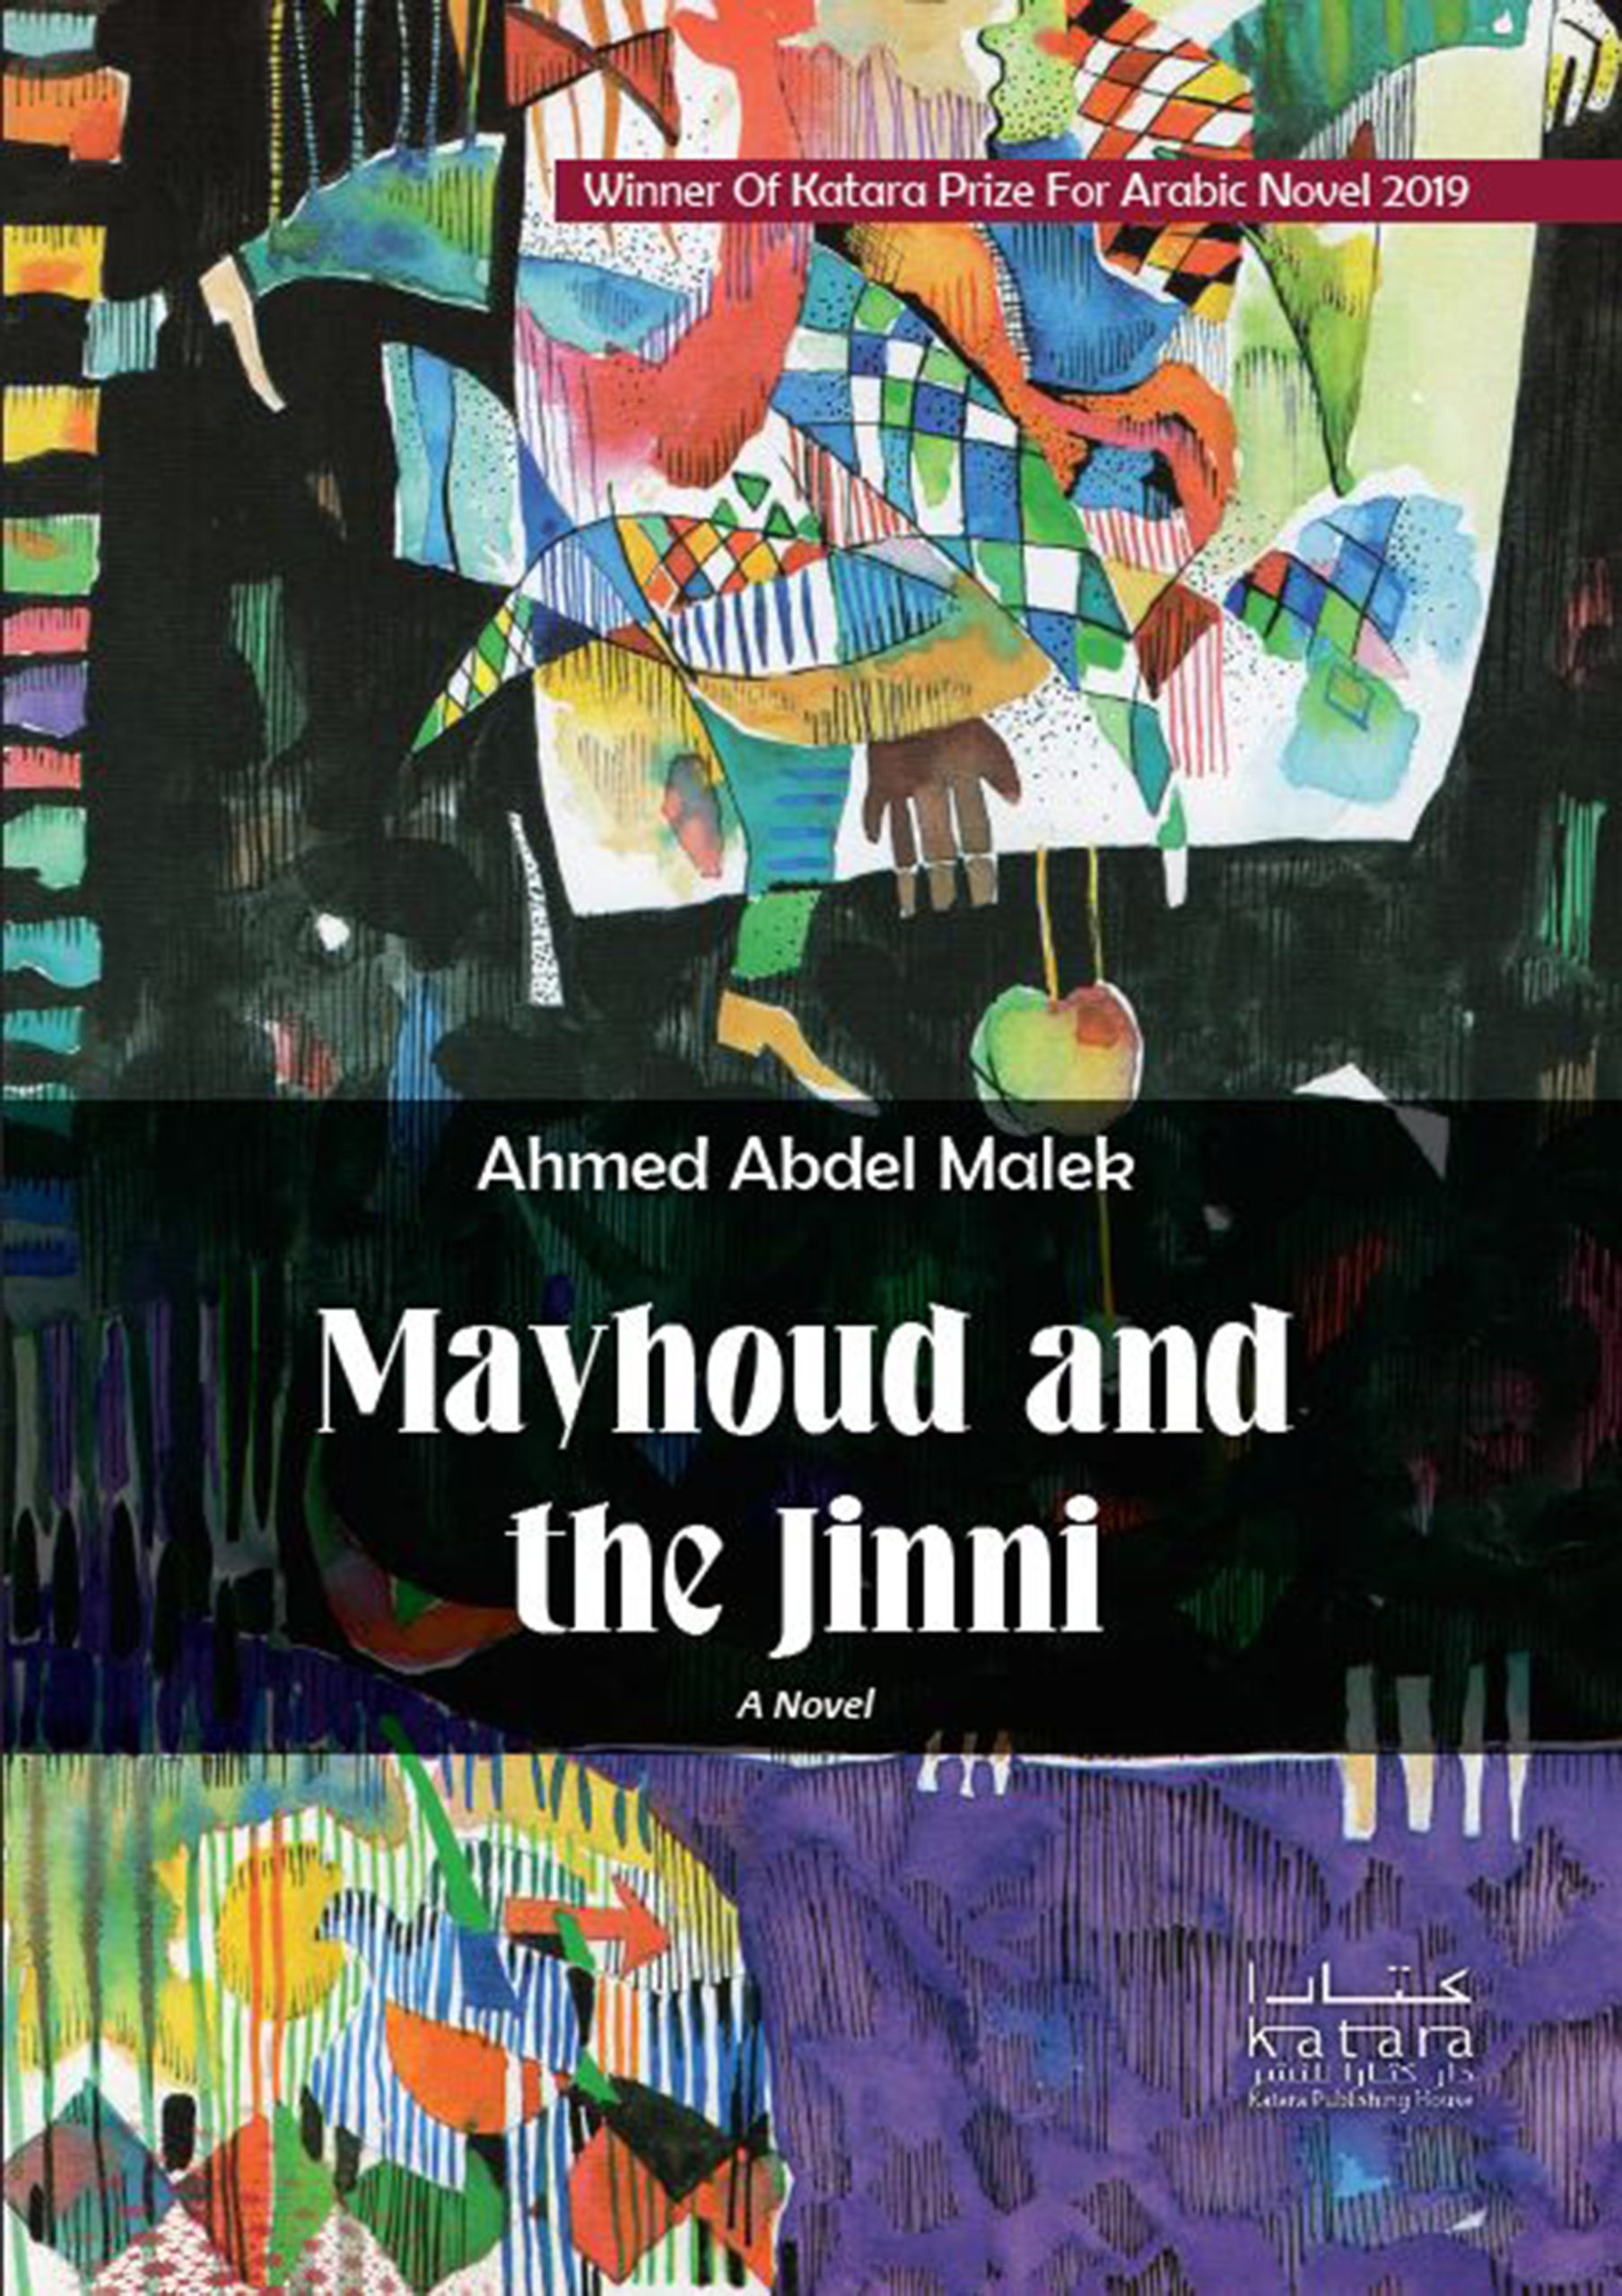 Mayhoud and the jinni